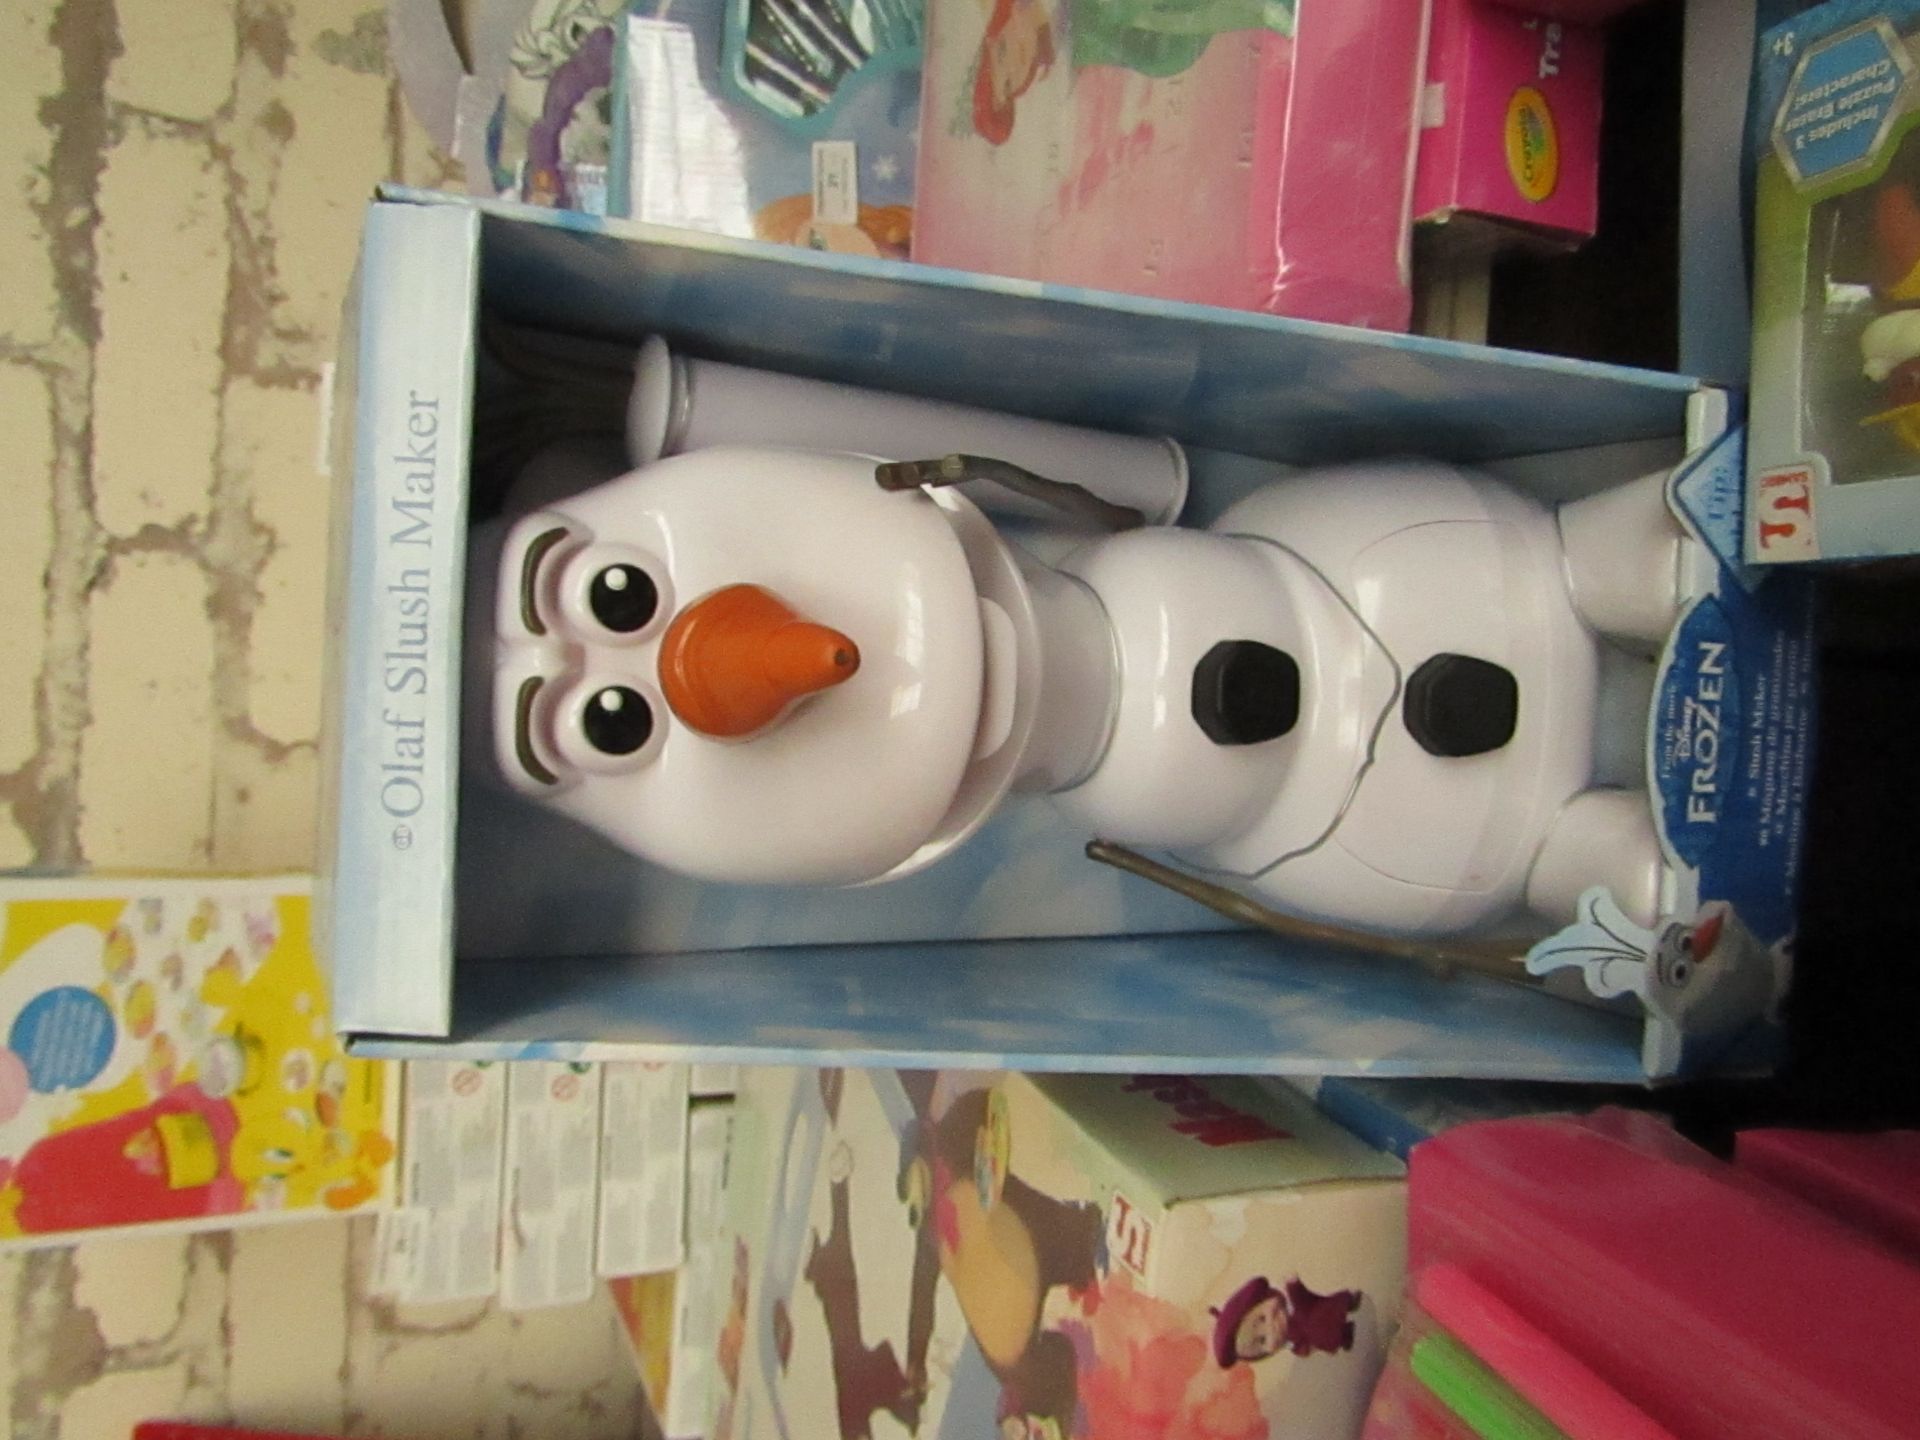 Disney Frozen Olaf slush maker, no visible damage and packaged.